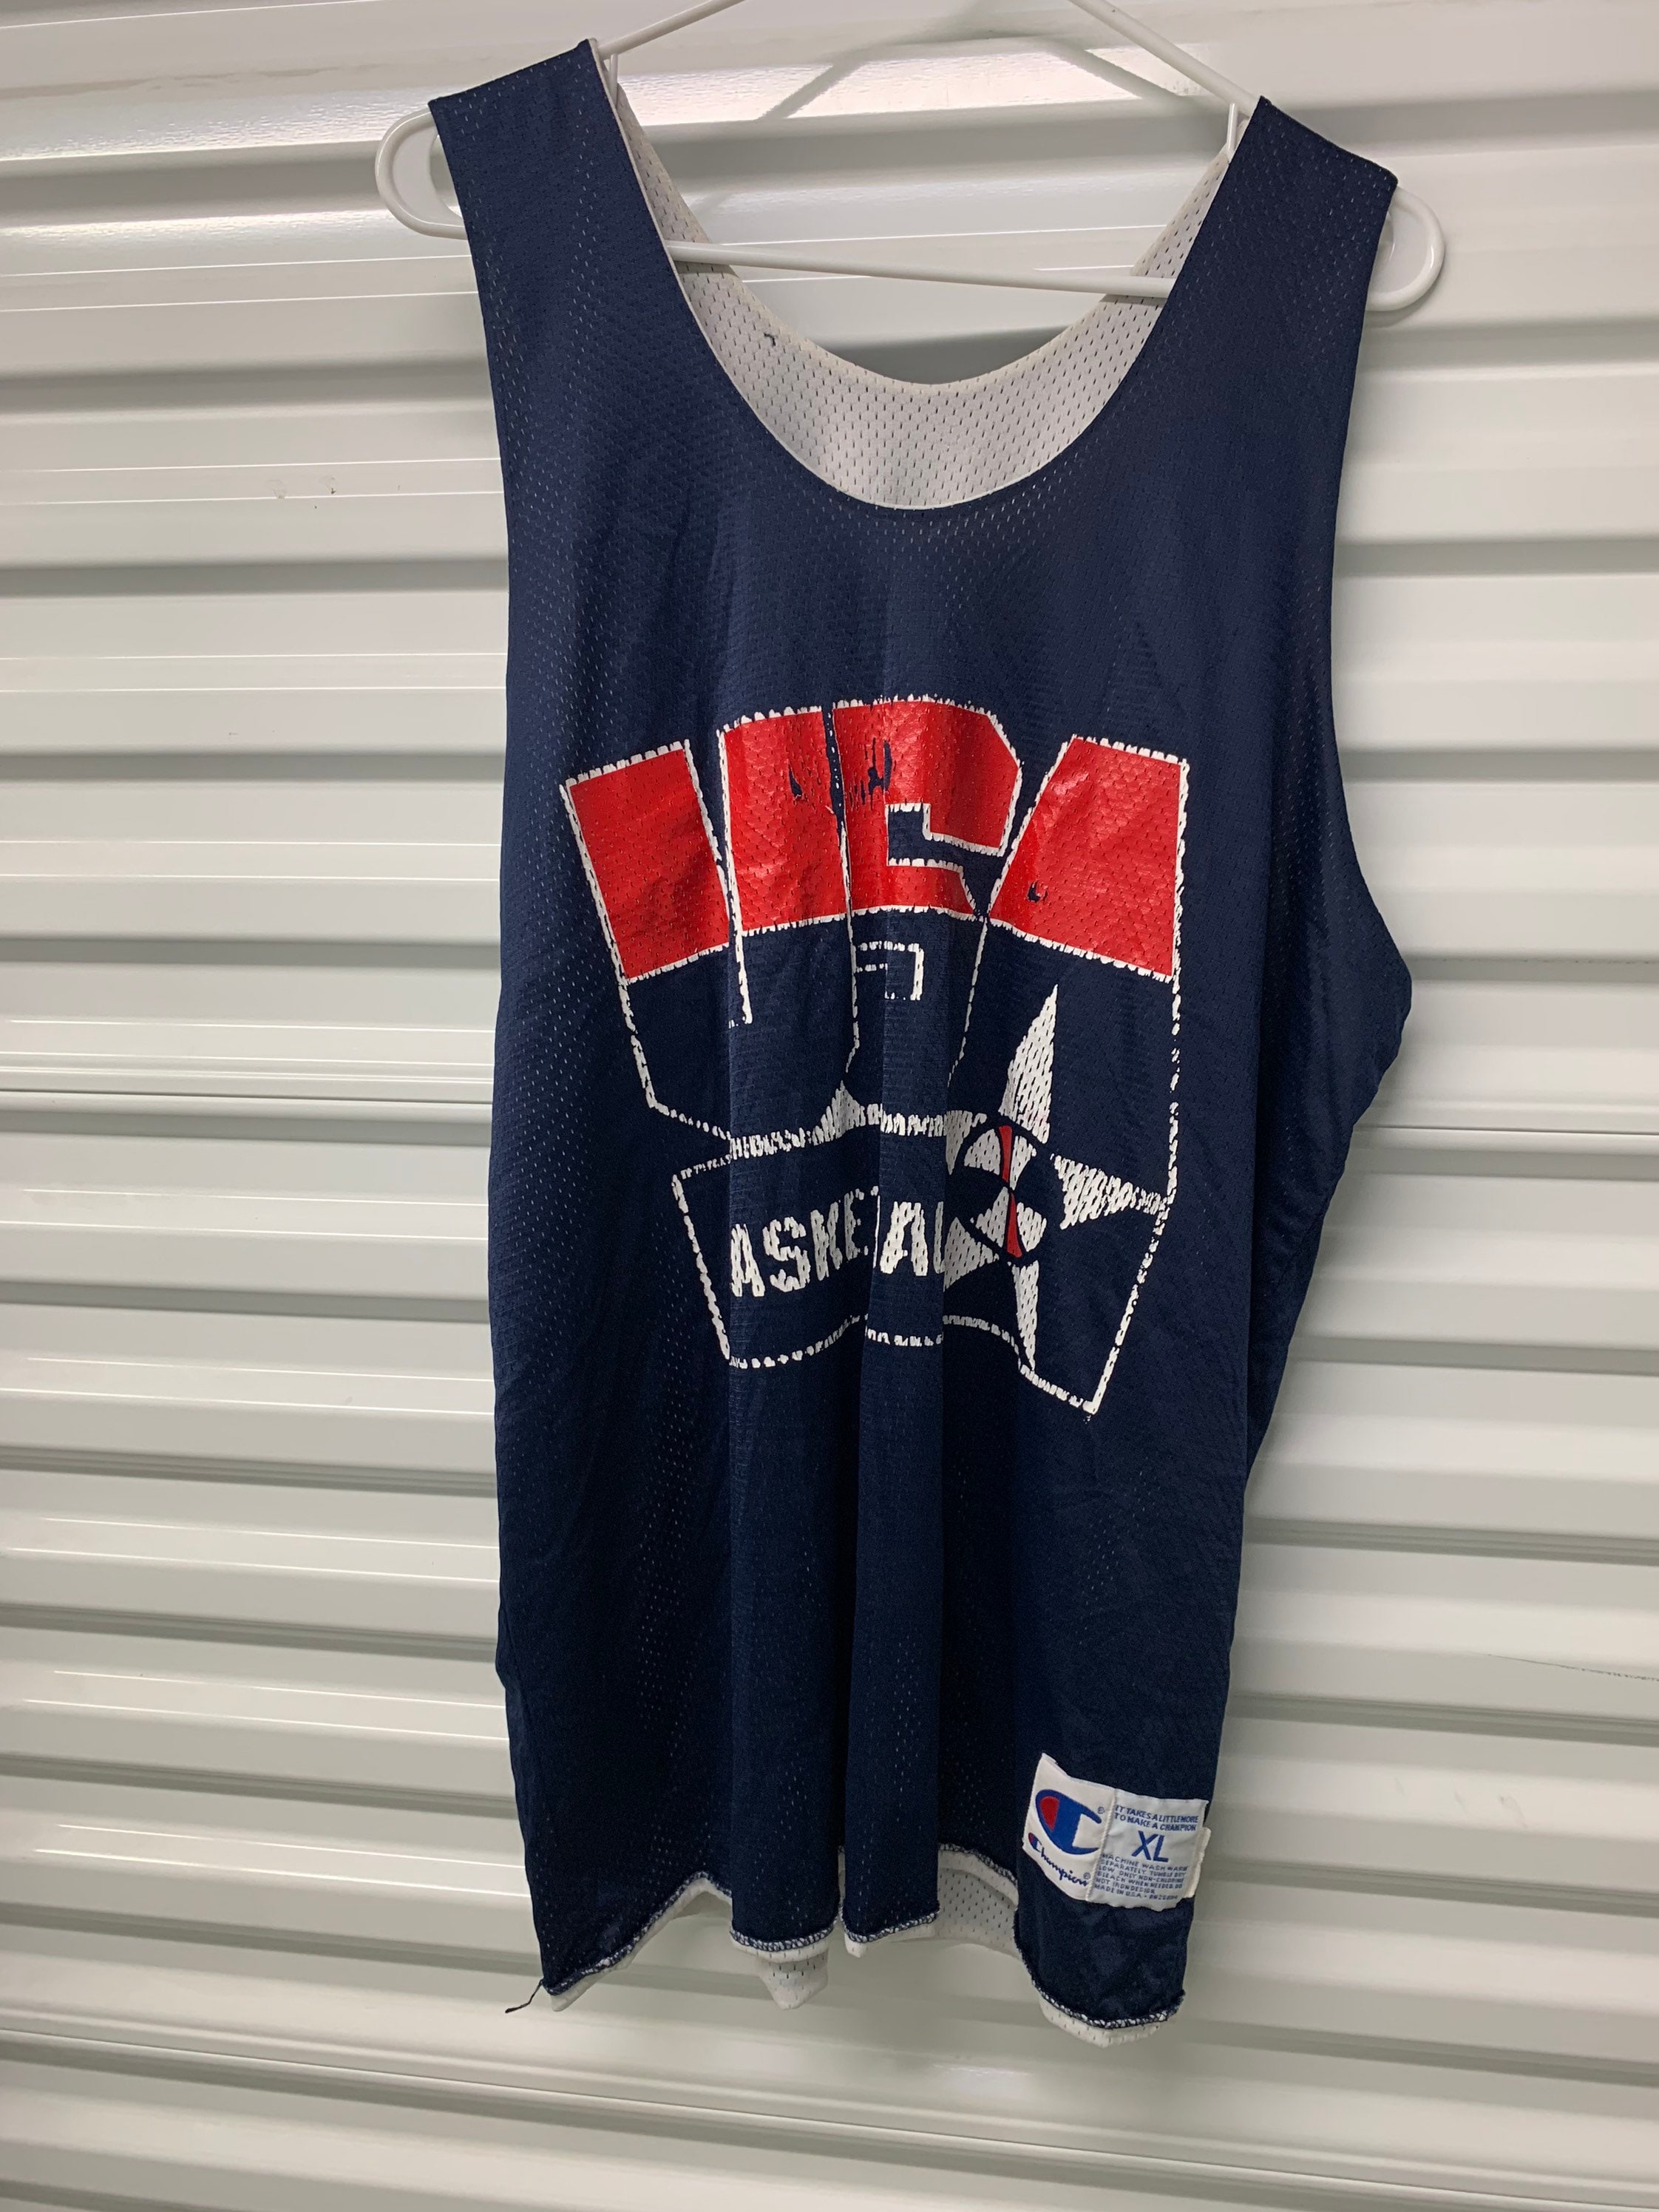 Vintage 1992 Dream Team USA Practice Jersey Sz. 48 (XL)